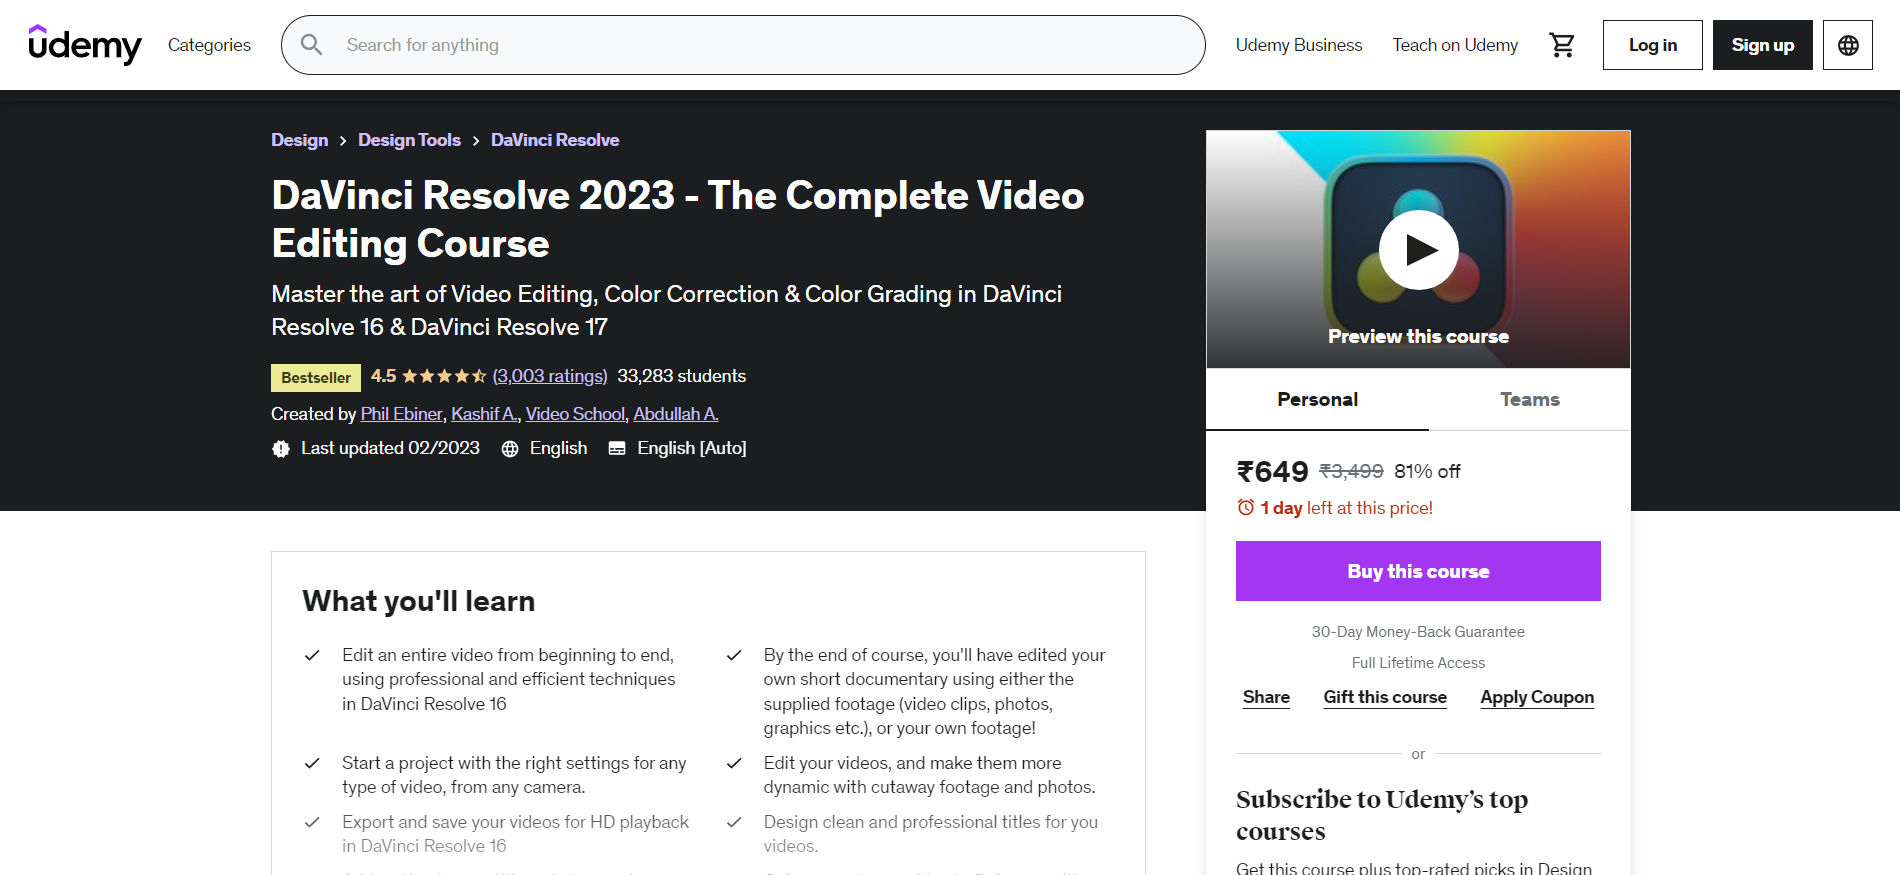 DaVinci Resolve 2023 - The Complete Video Editing Course